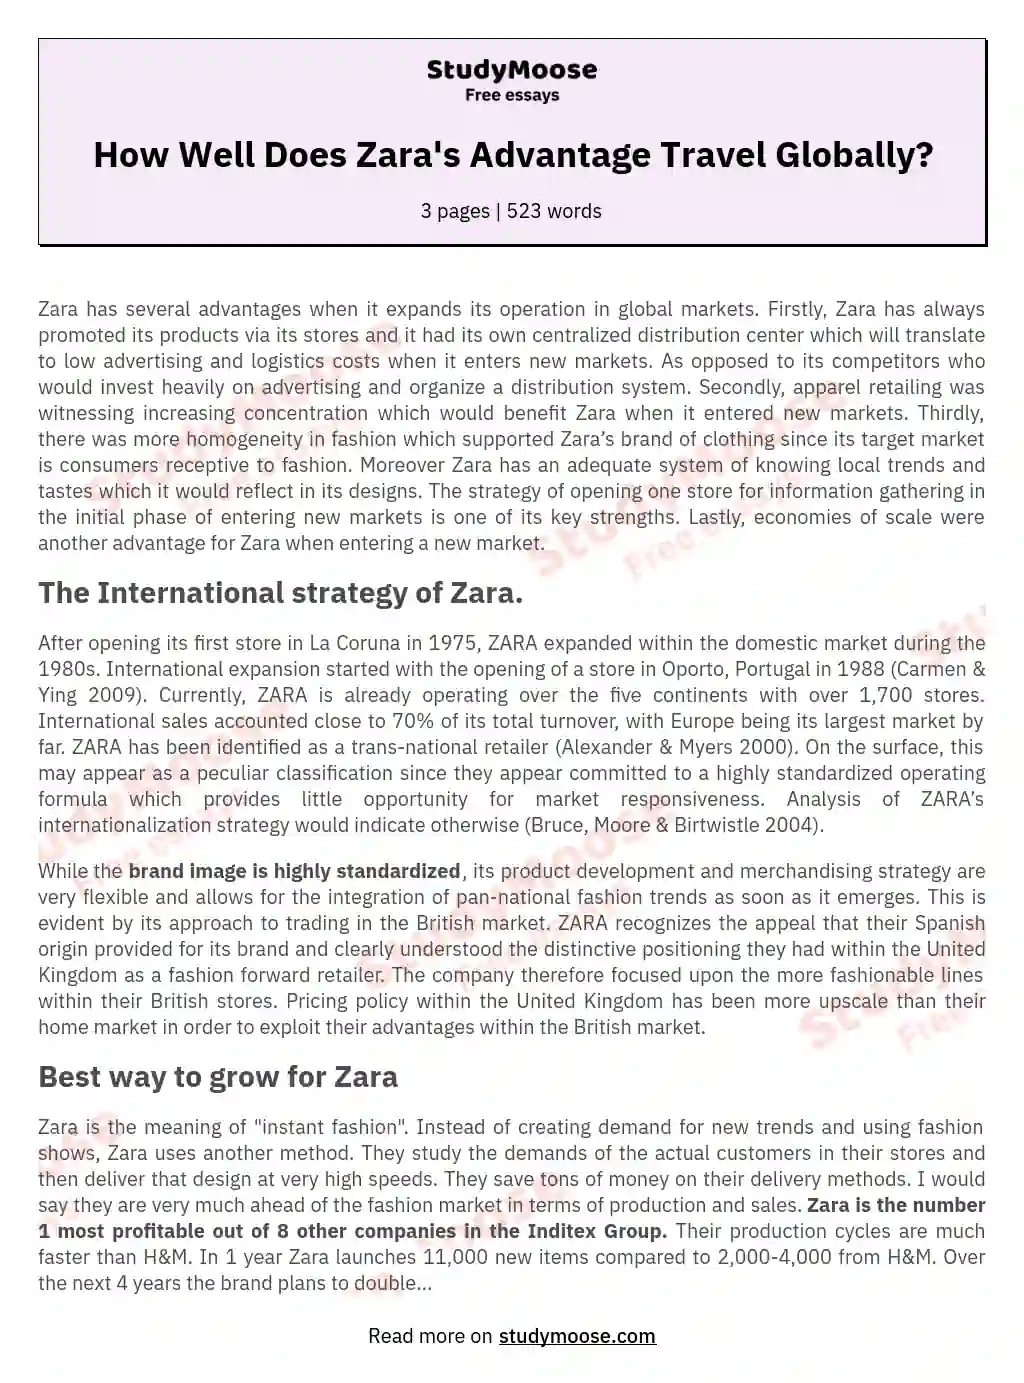 How Well Does Zara's Advantage Travel Globally? essay